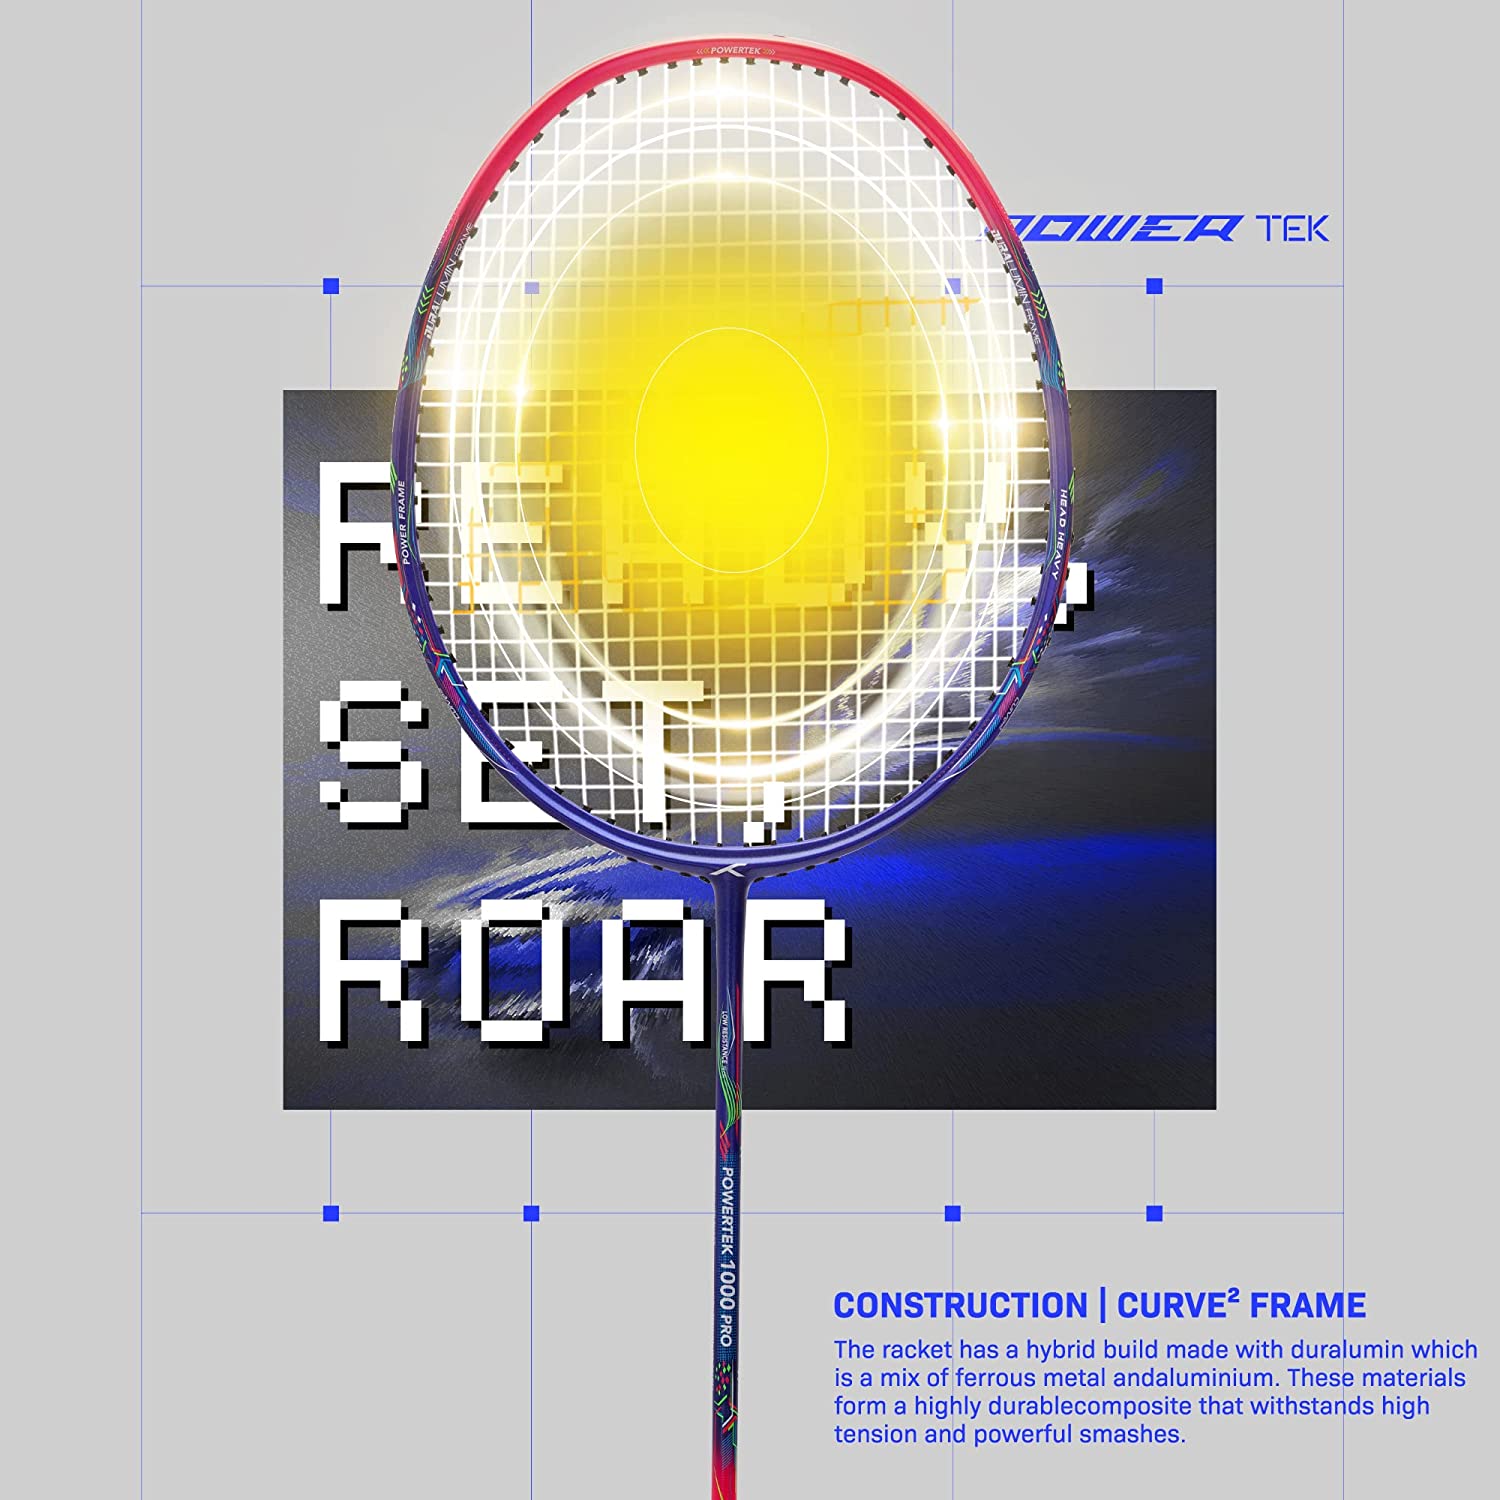 Hundred Powertek 1000 Pro Graphite Strung Badminton Racquet - Best Price online Prokicksports.com